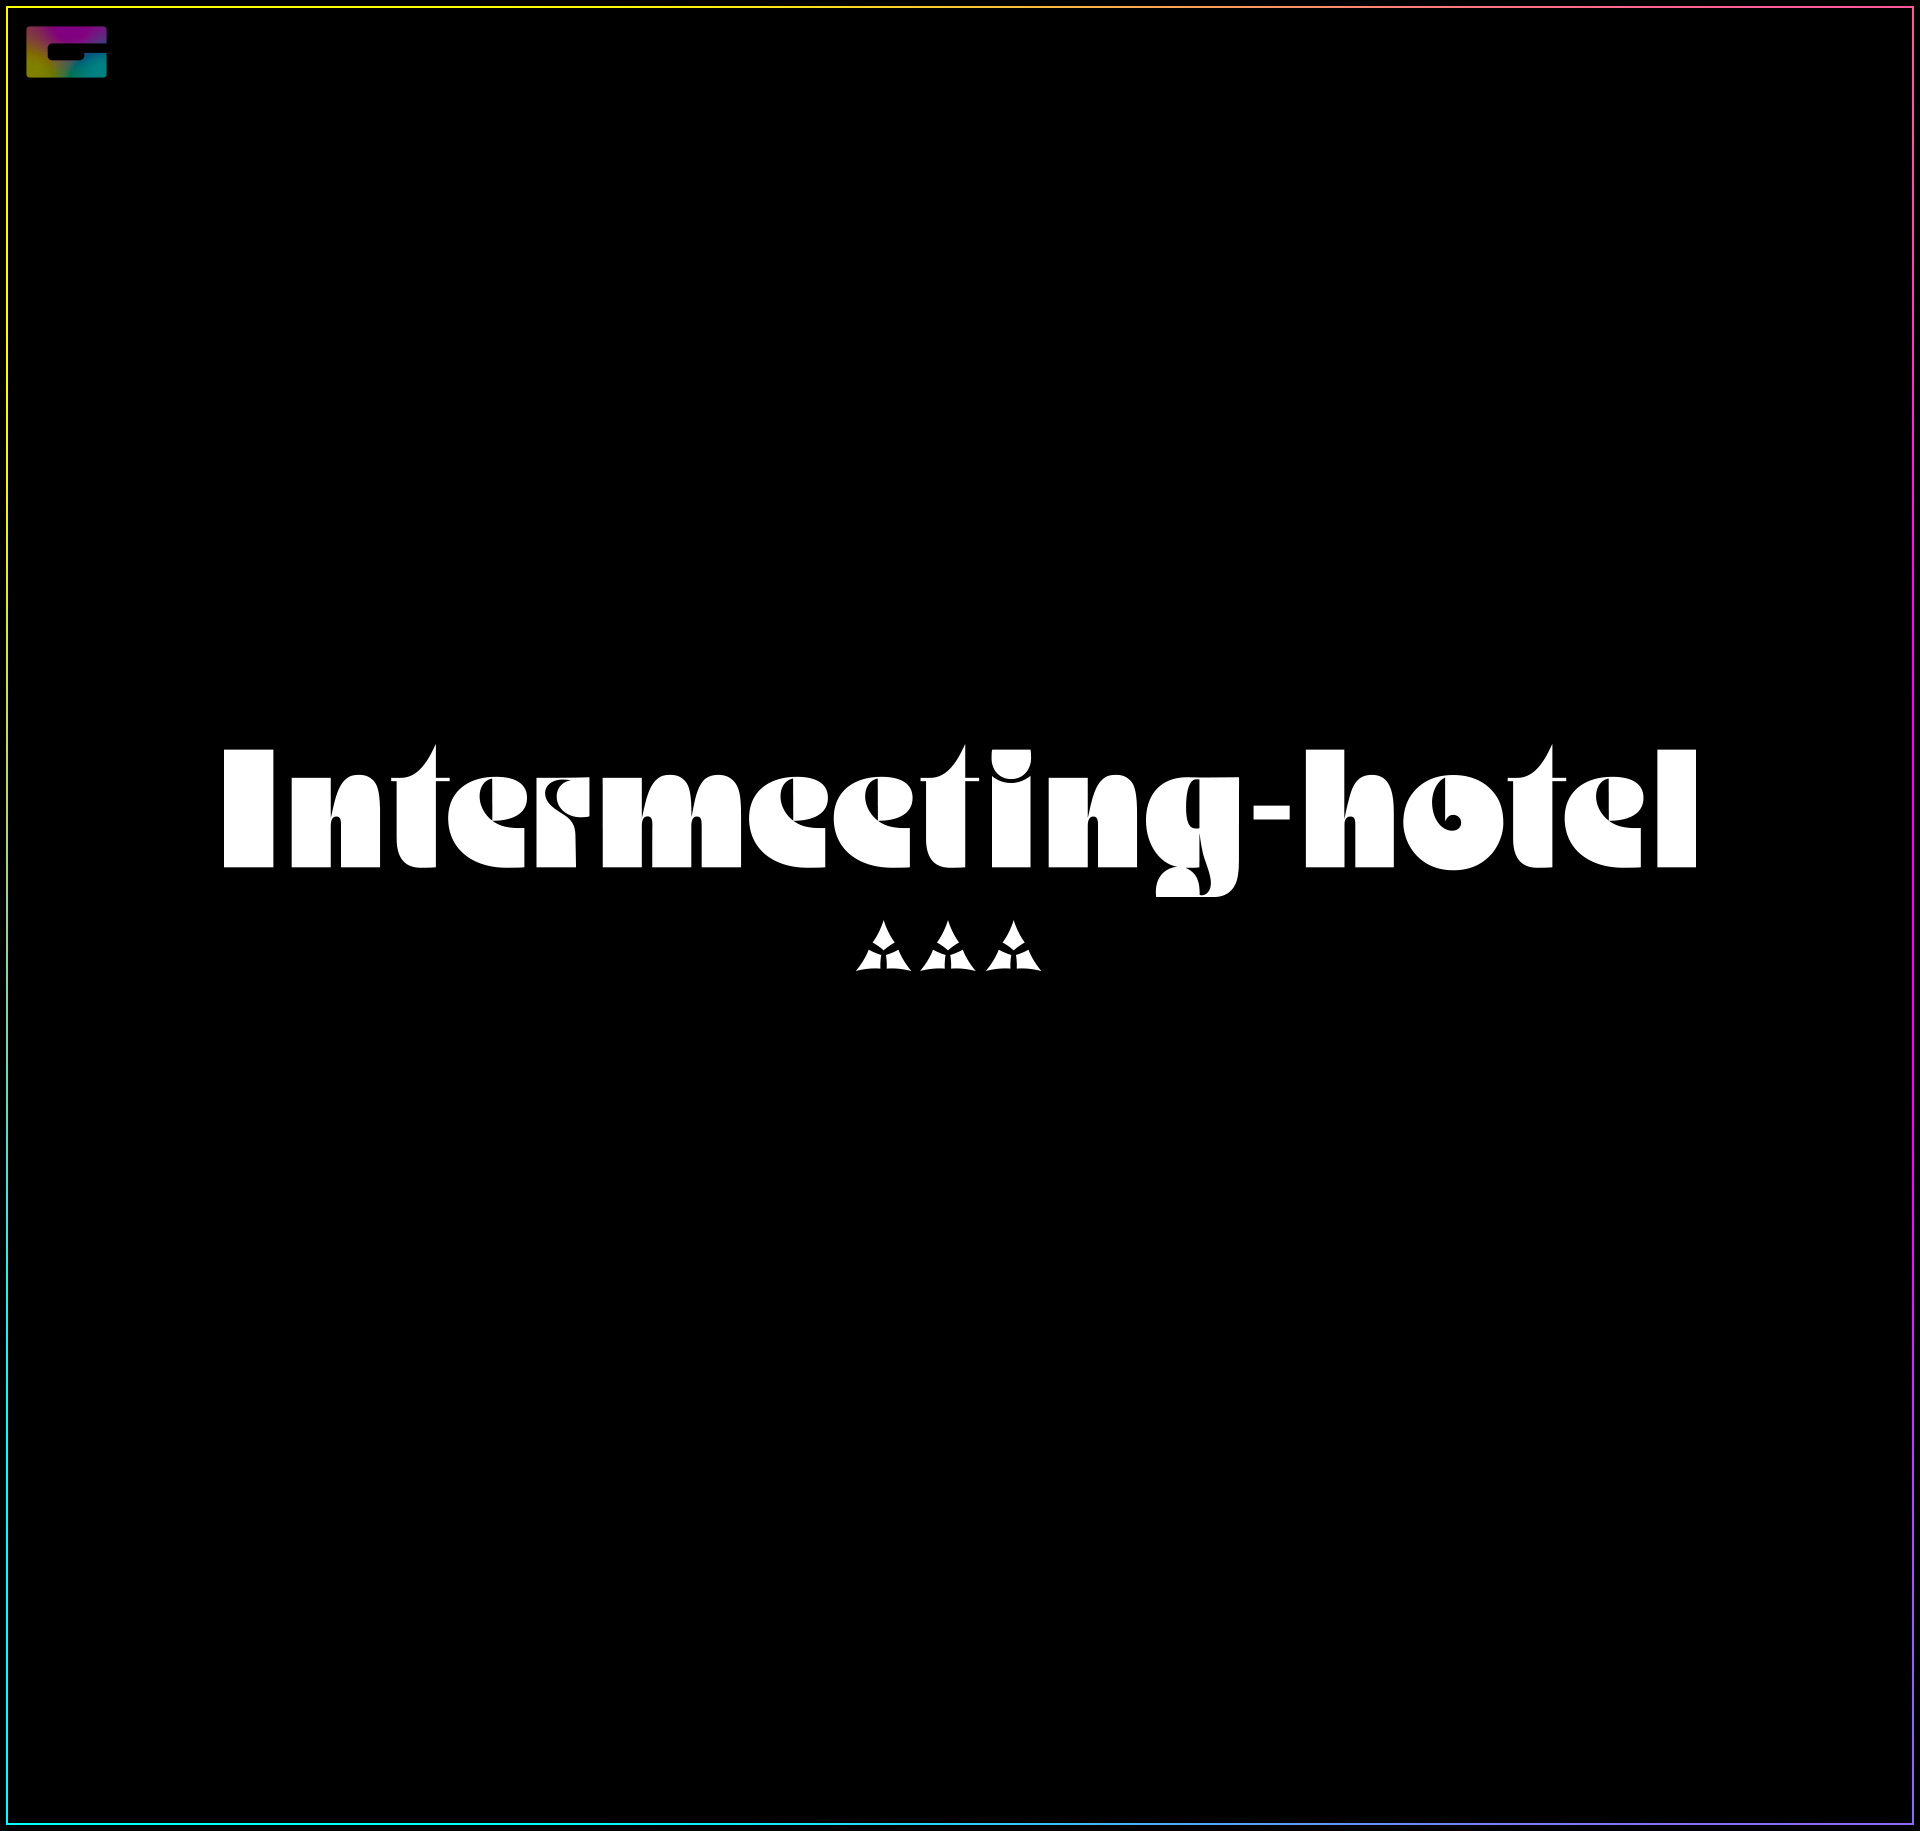 Intermeeting-hotel: logo | gridFitType | Georges Van den Heuvel